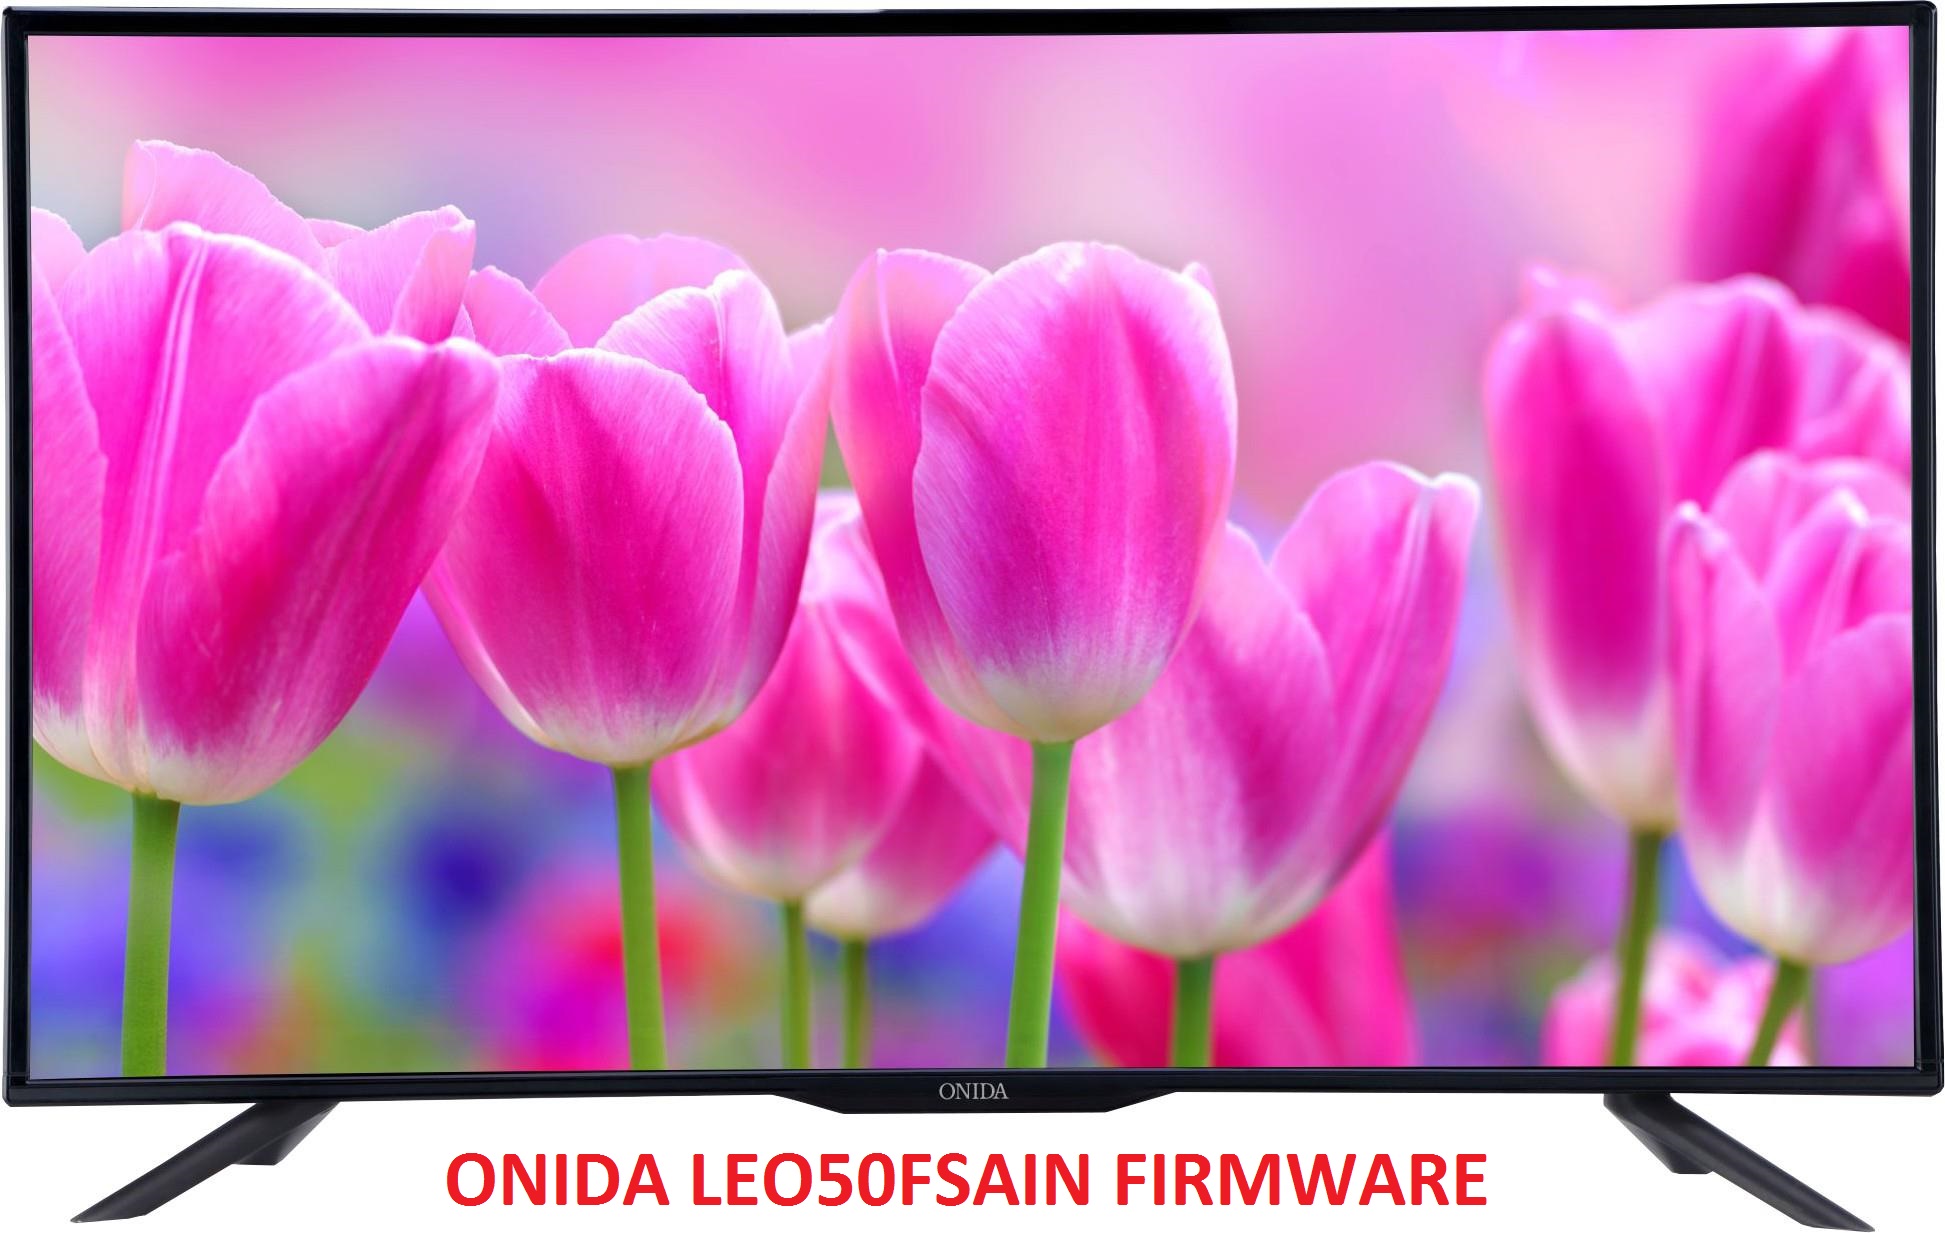 Onida_Leo50Fsain_Firmware